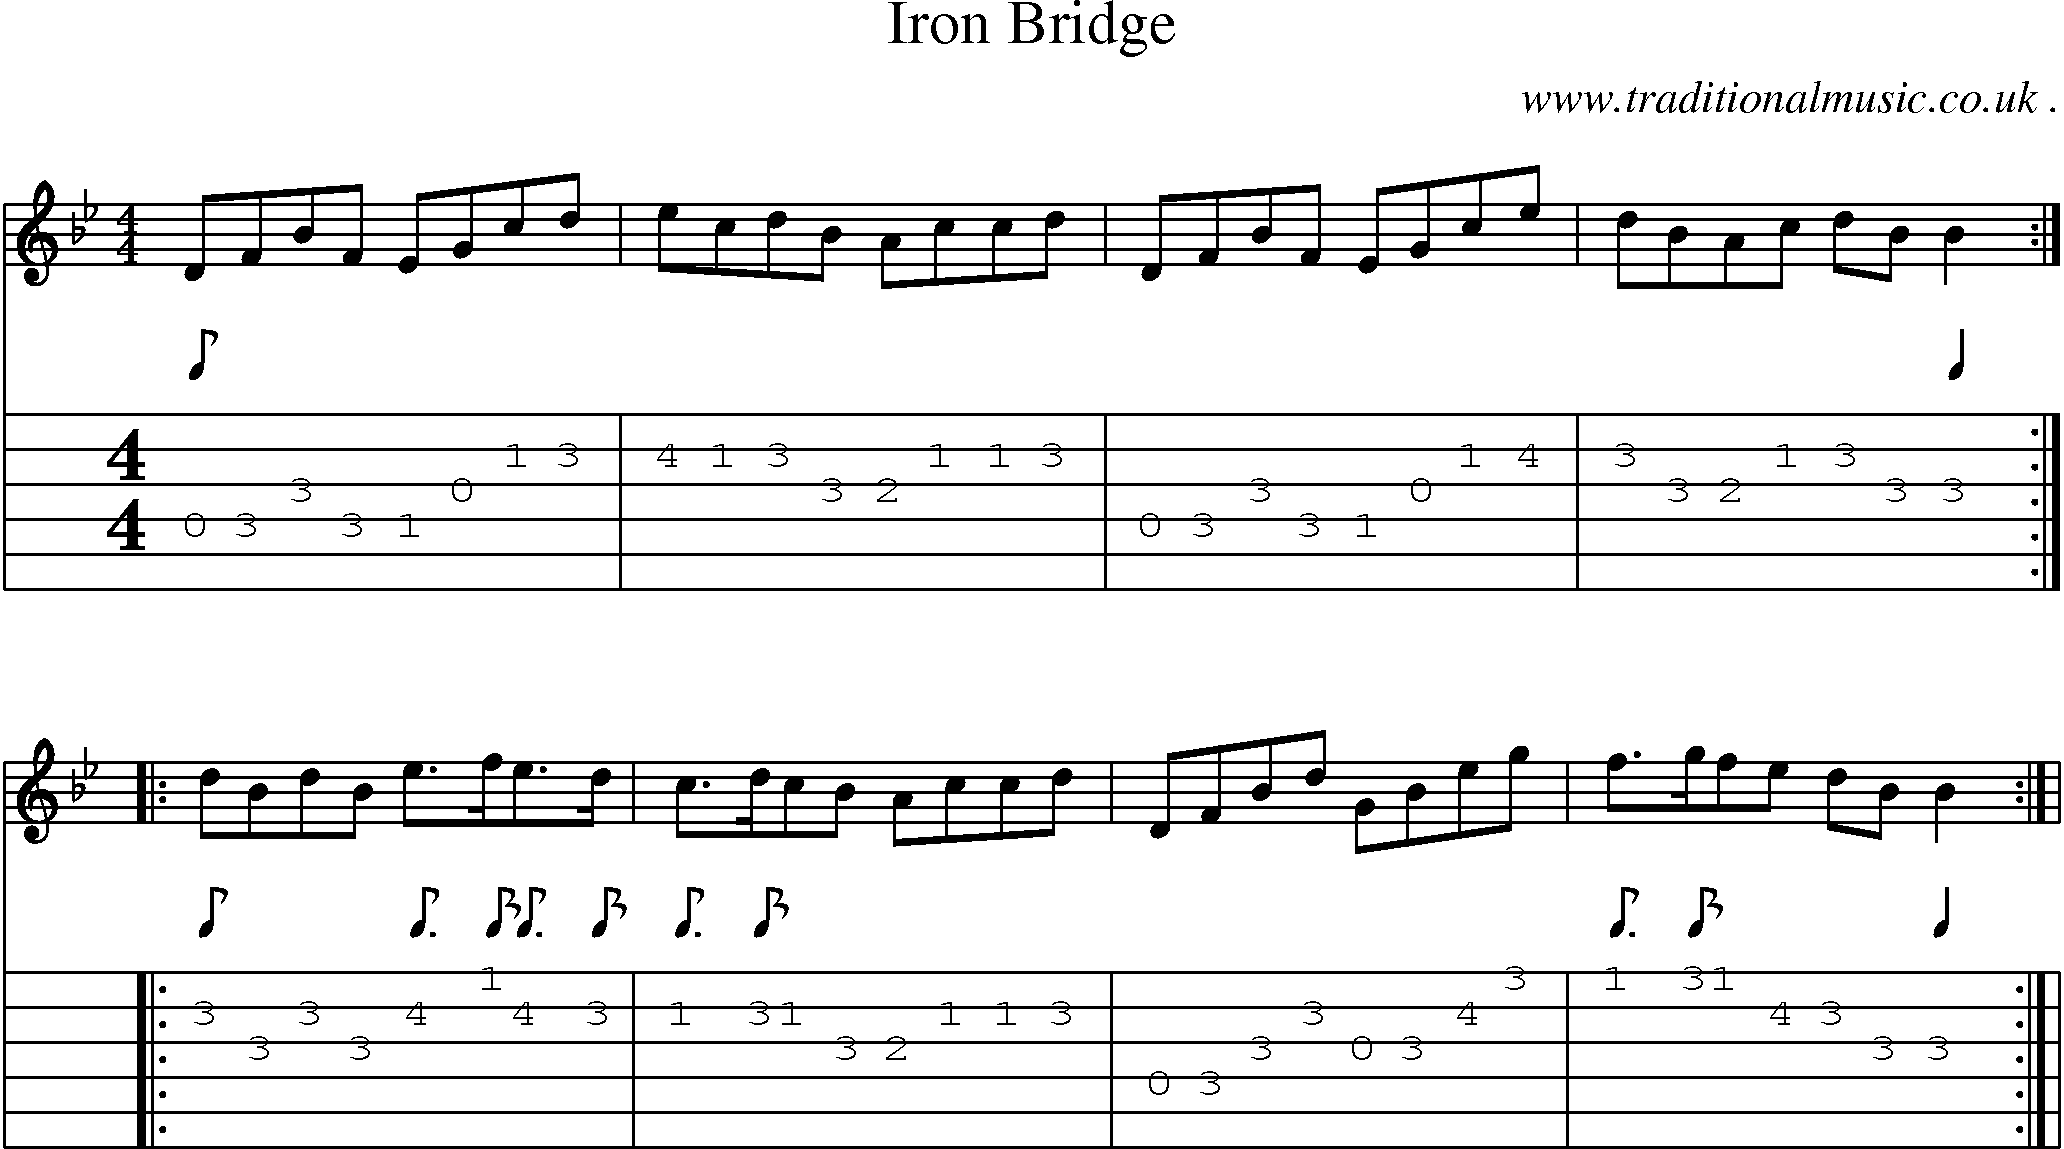 Sheet-Music and Guitar Tabs for Iron Bridge